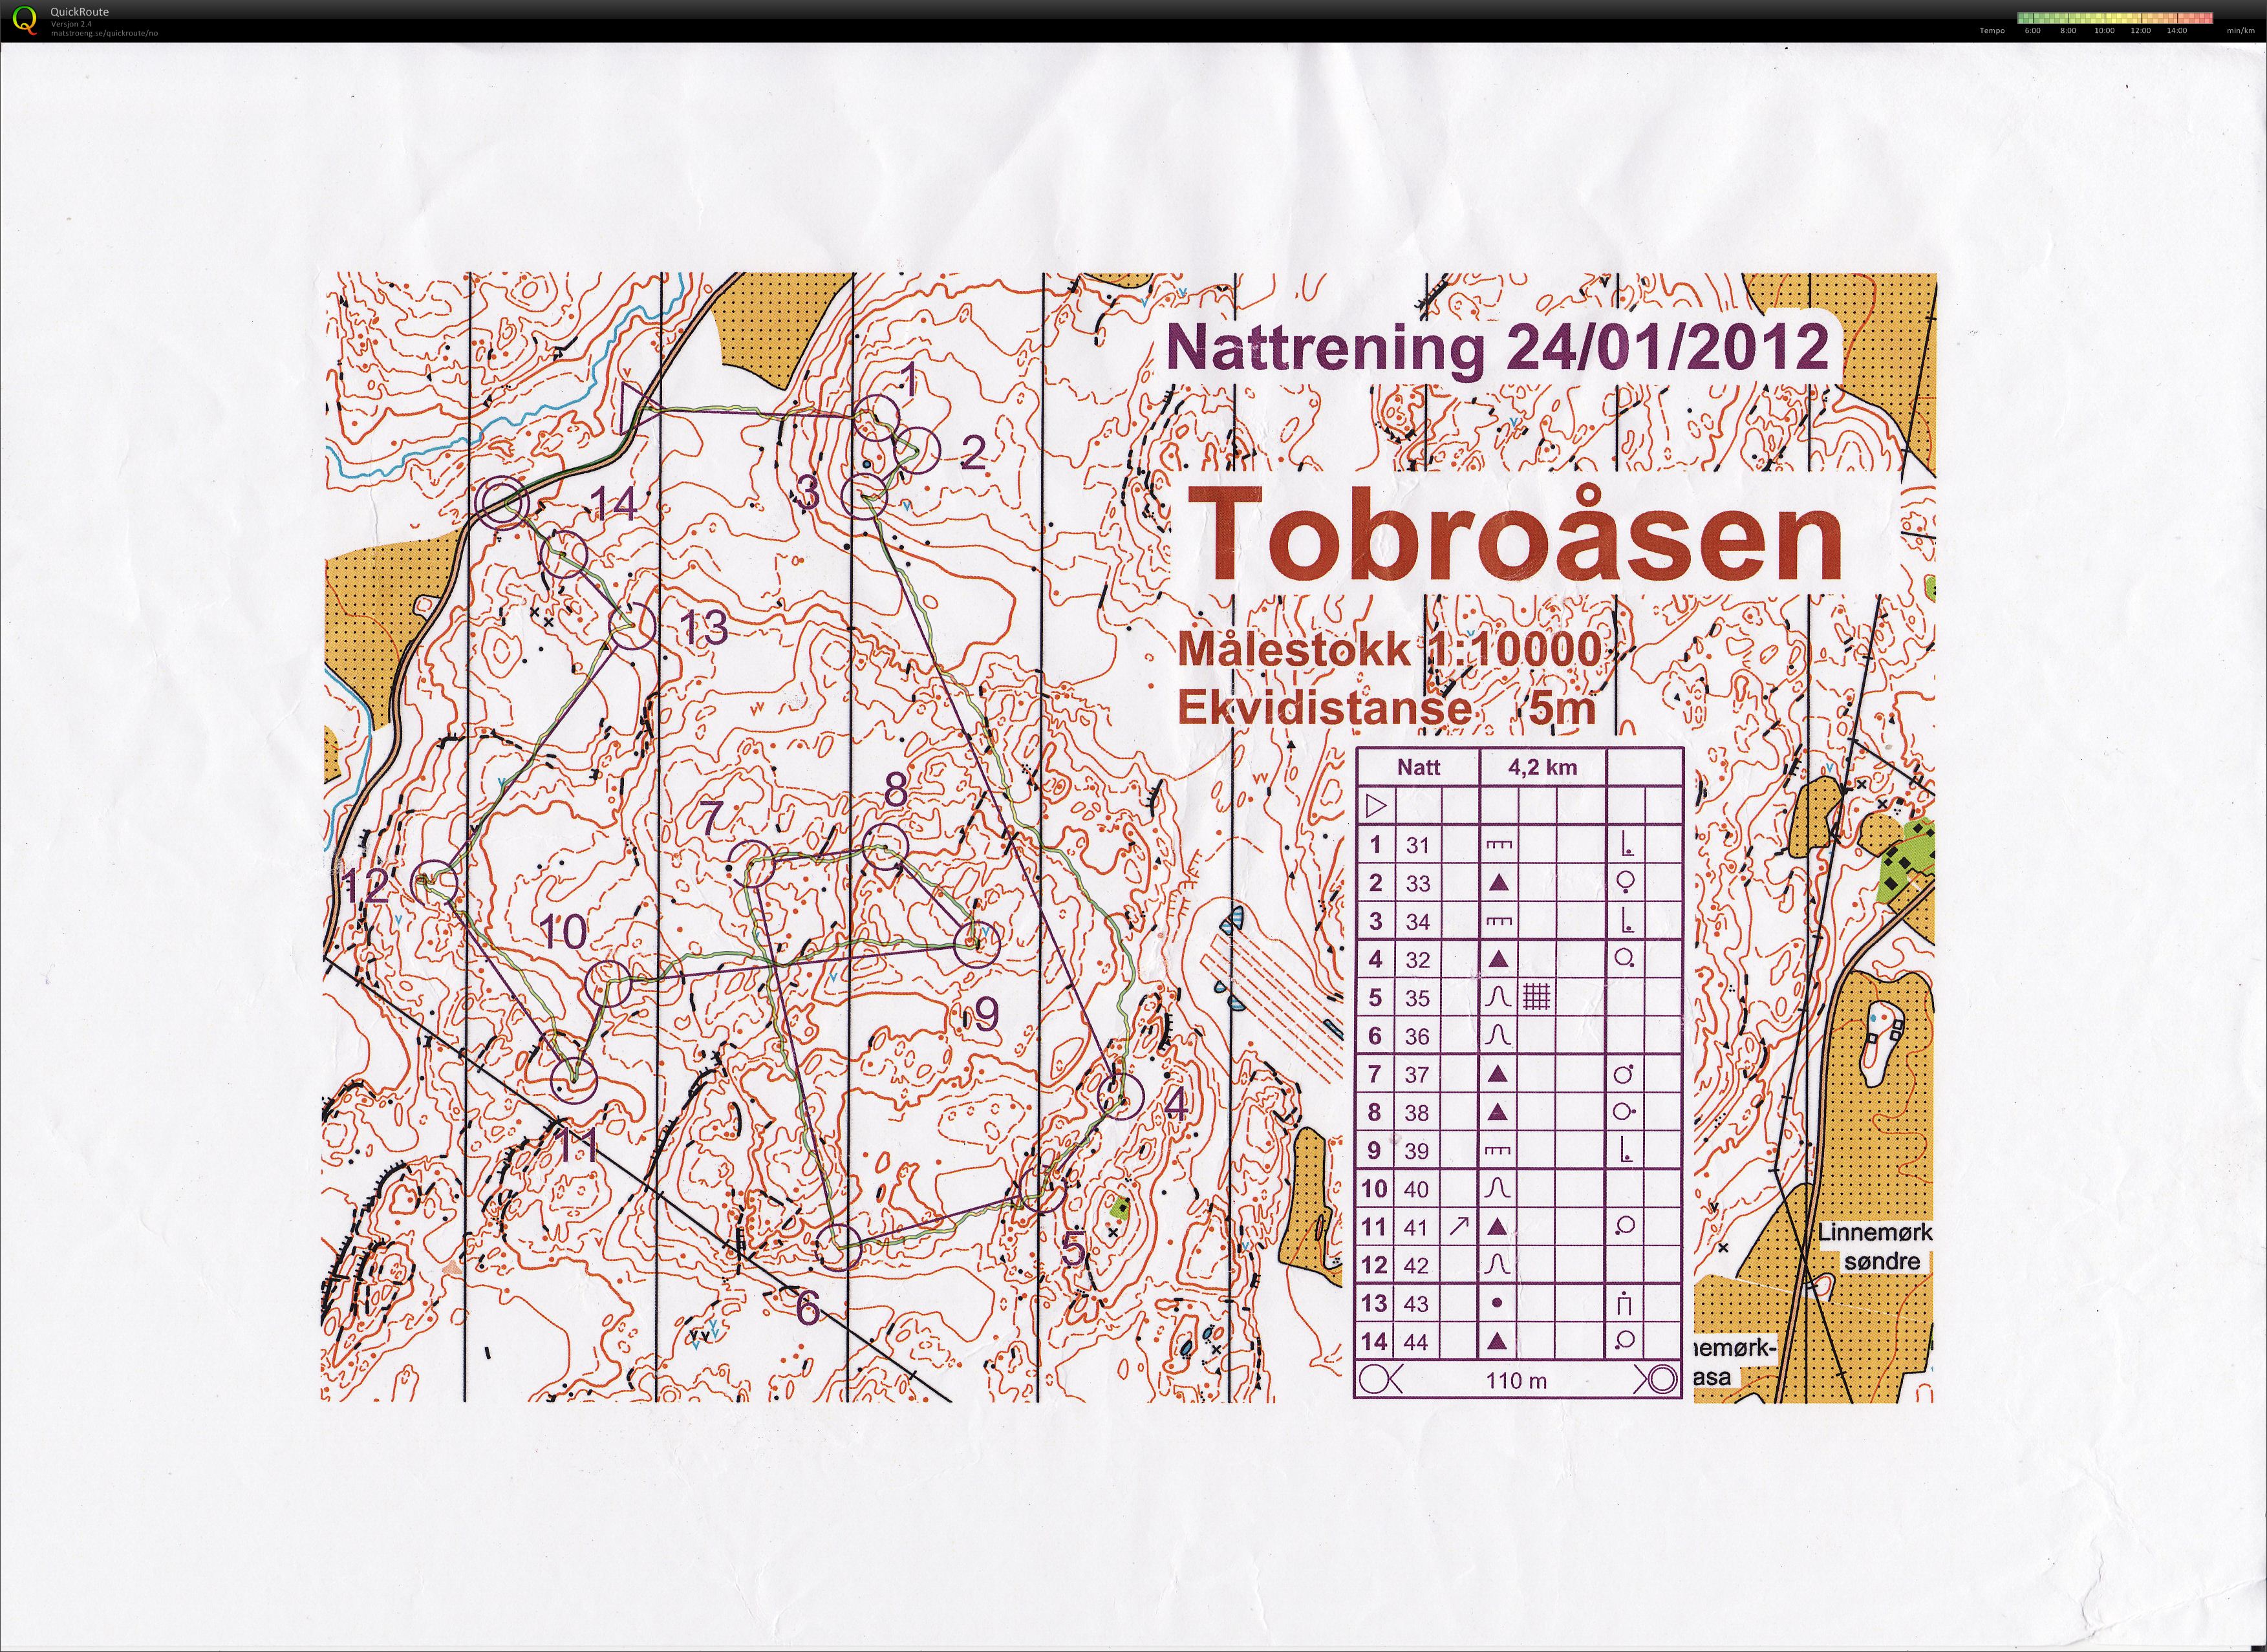 Rolig økt Tobroåsen (14/02/2012)